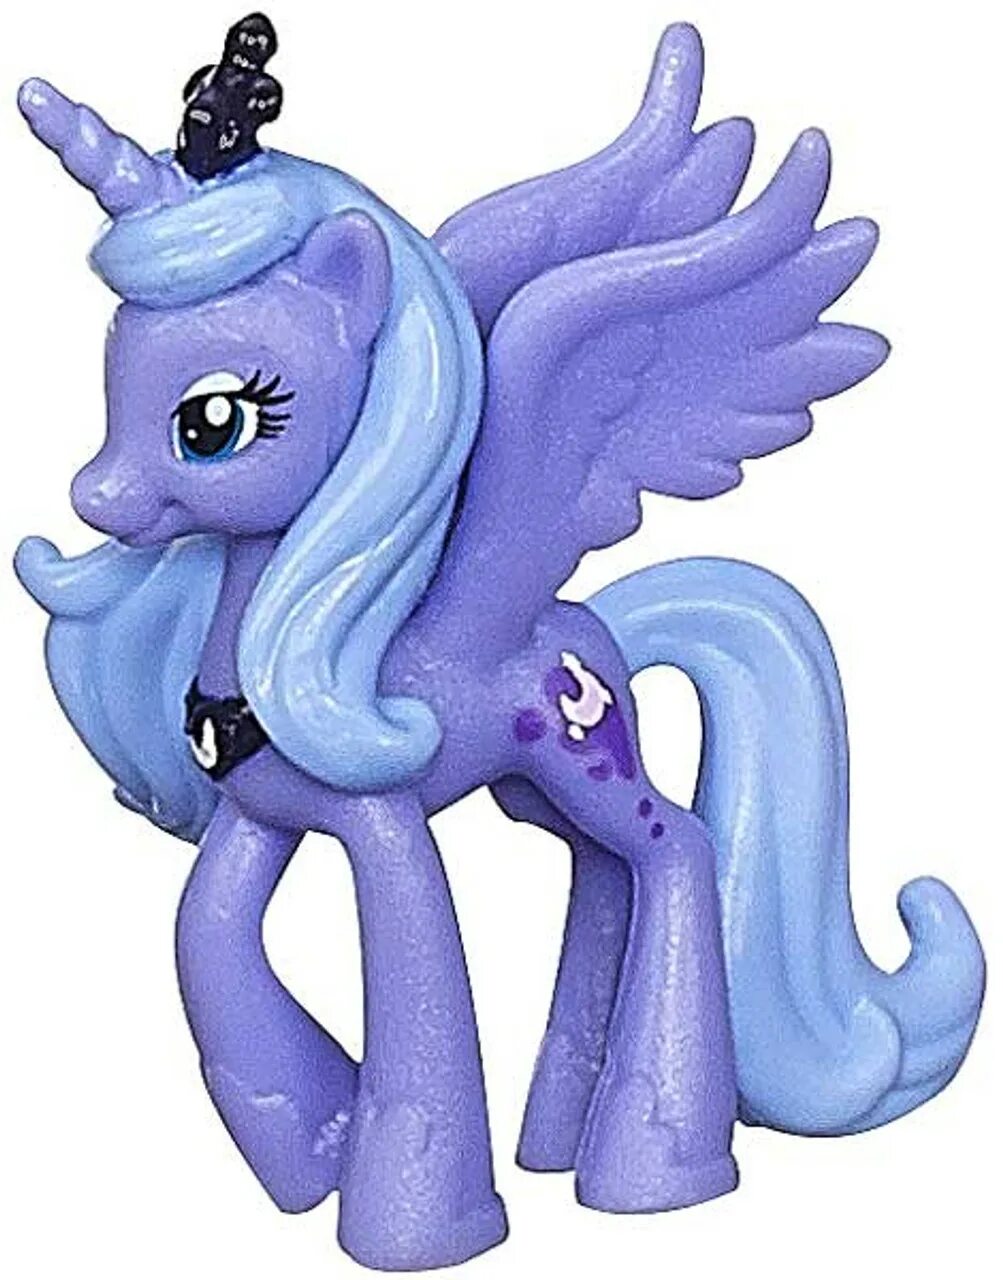 Пони луна игрушка. Фигурка Hasbro my little Pony - принцесса Луна e5963. Принцесса Луна фигурка Хасбро. My little Pony игрушки принцесса Луна. Фигурка Hasbro Princess Luna b7815.